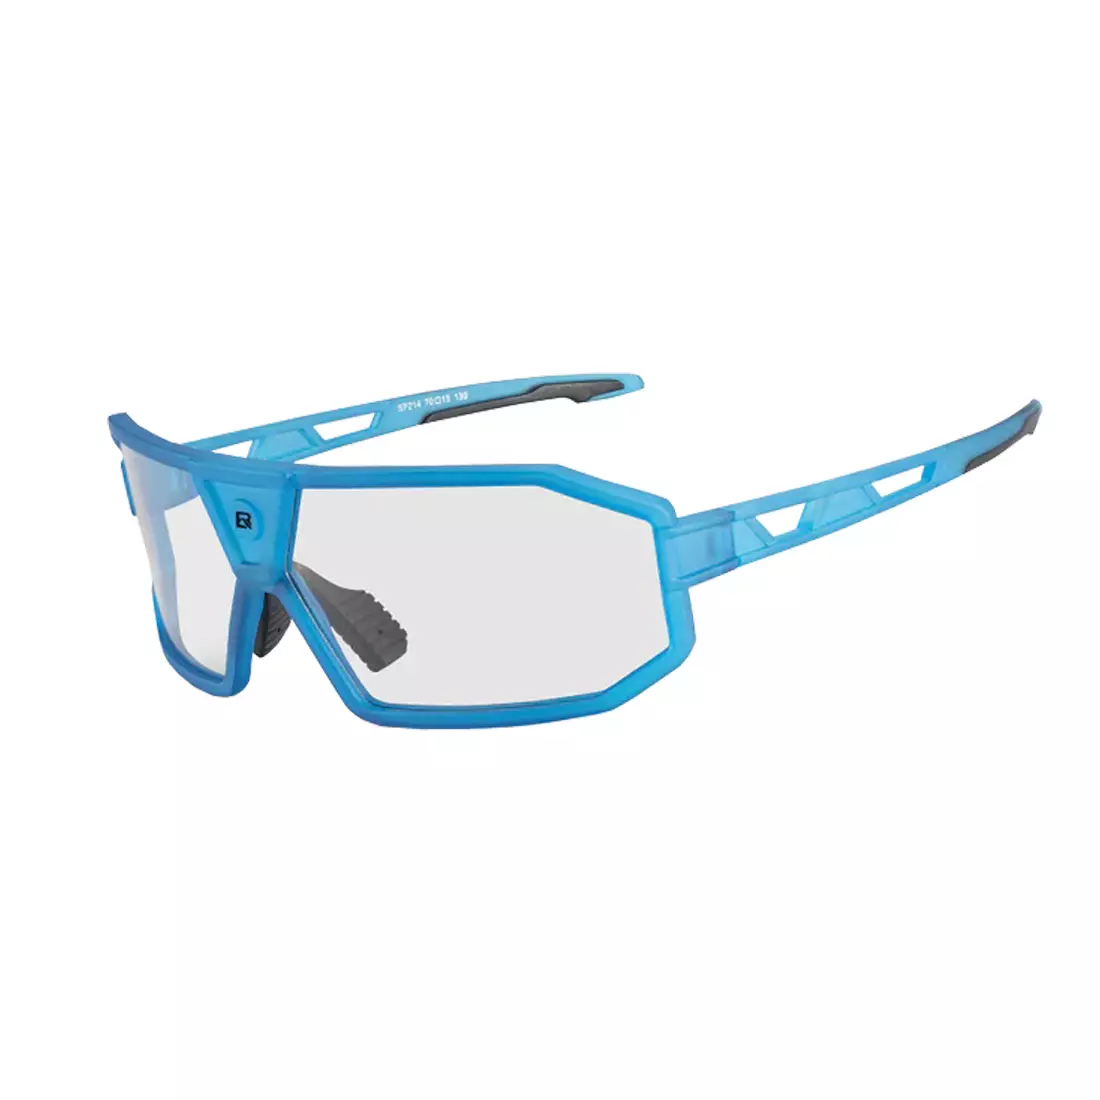 Rockbros SP214BL cyklistické / sportovní brýle fotochrom modrá